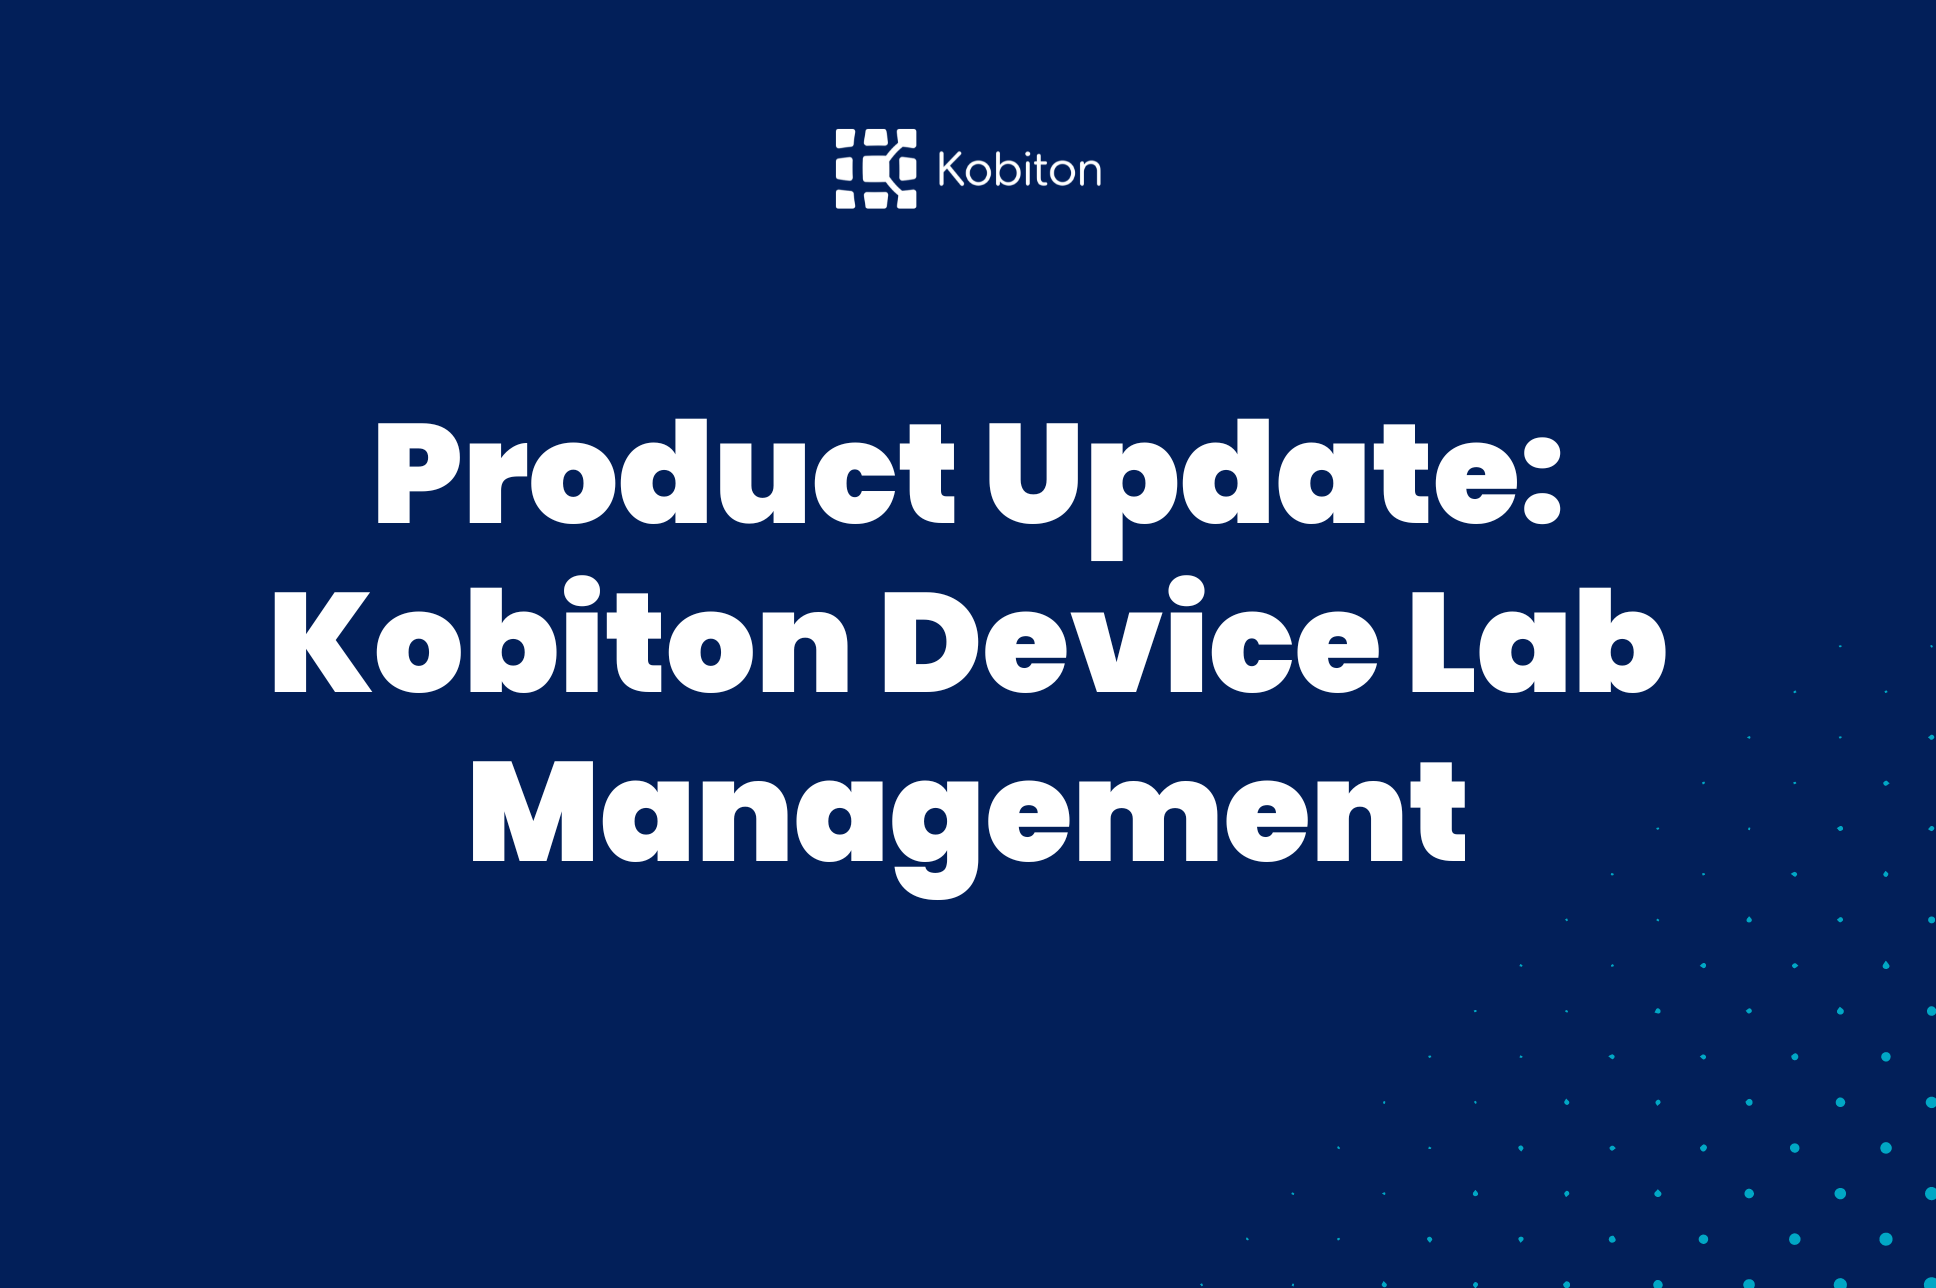 Product update: Kobiton Device Lab Management